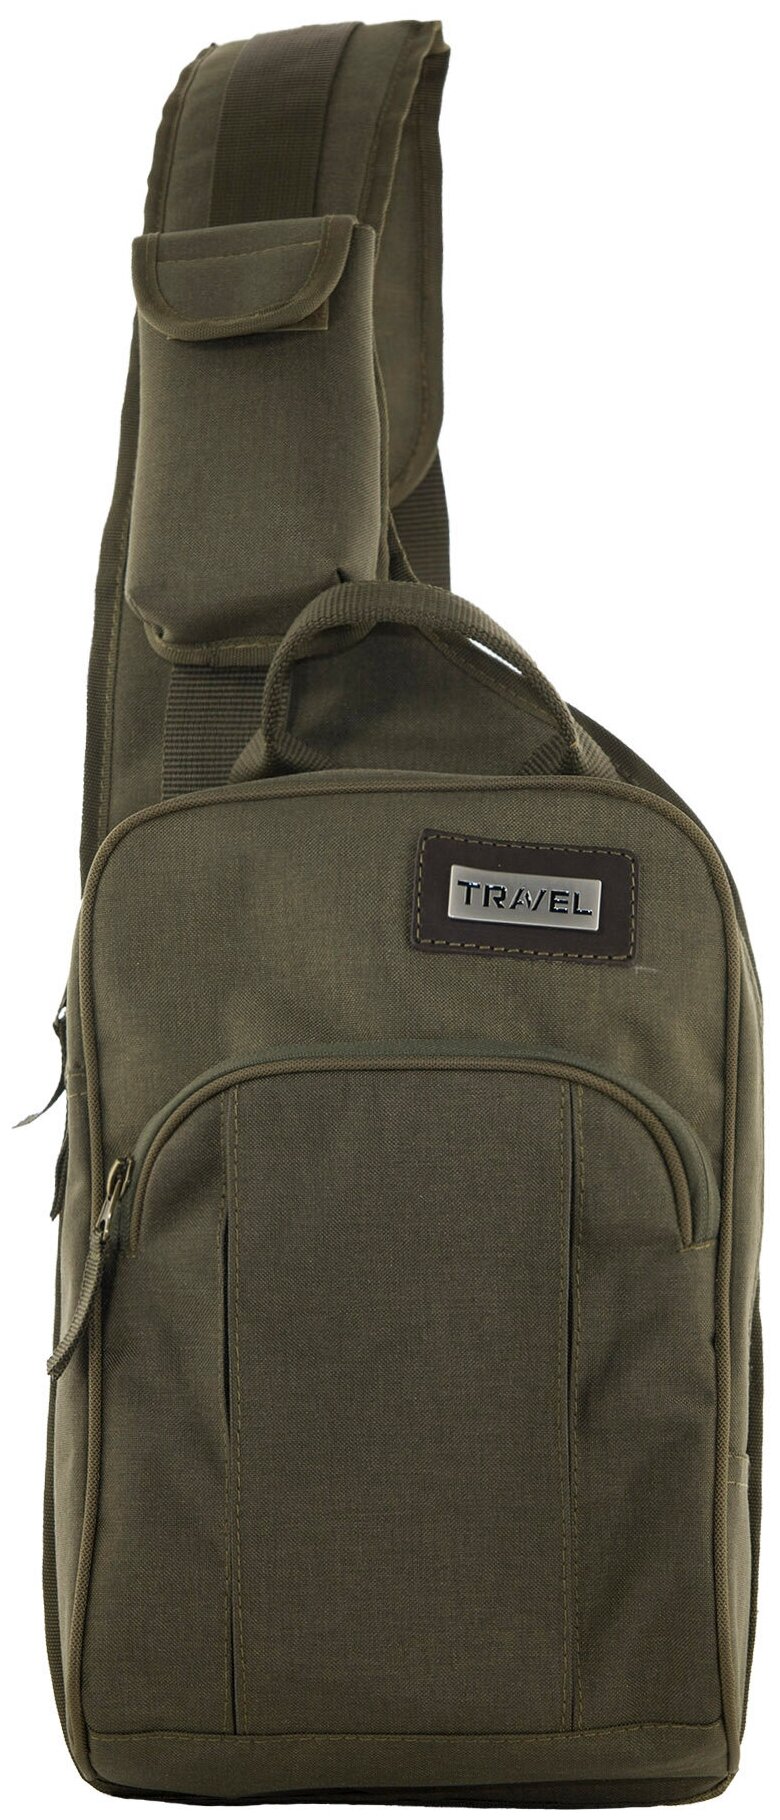 Одноплечевая сумка-рюкзак Aquatic С-32 (Цвет:Хаки)